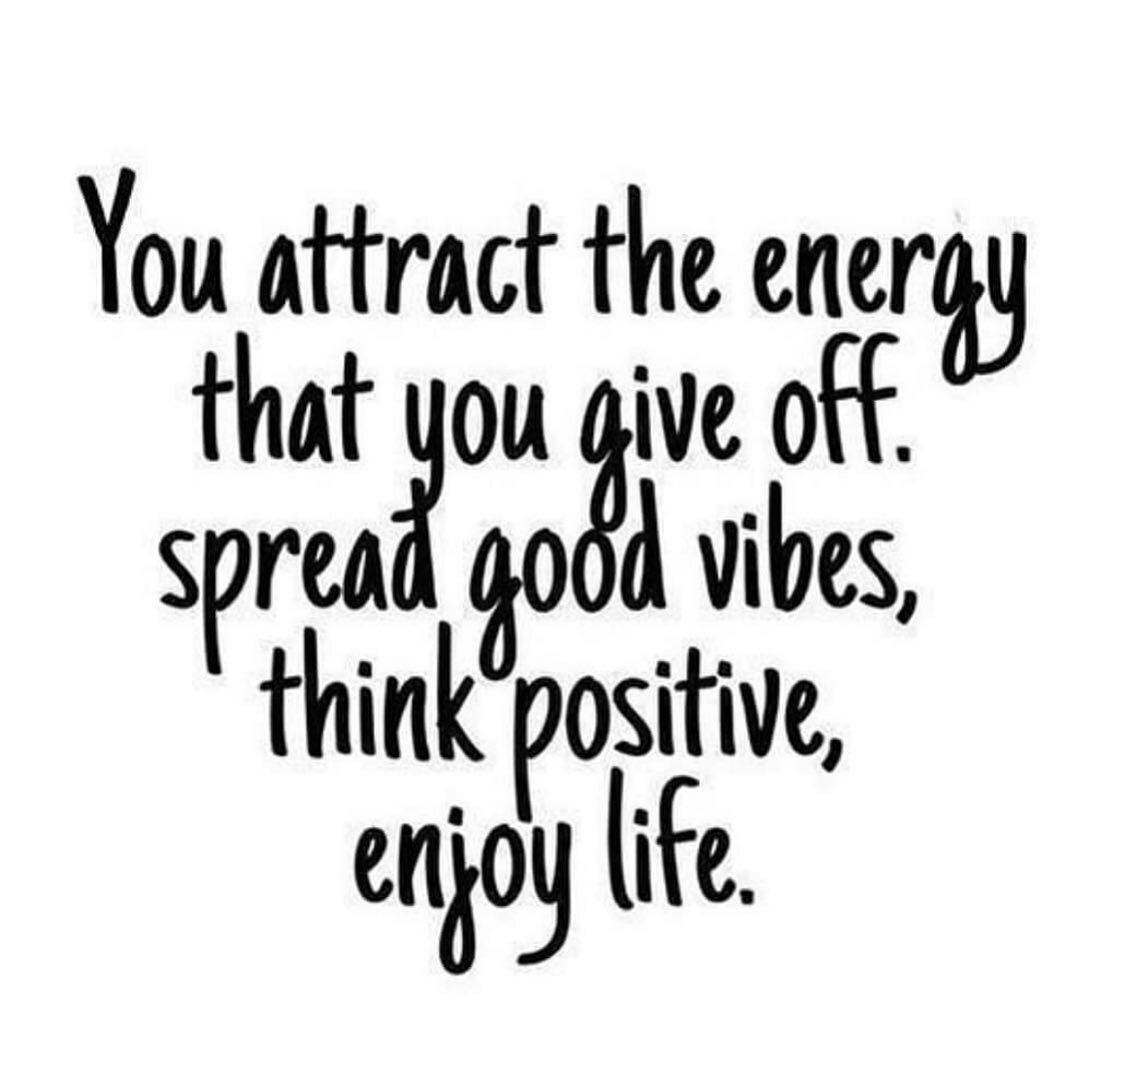 Positive thoughts &amp; good vibes only! 

#innerwarrior #womenwhowarrior #warriorwomen 
#attracttheenergyyouwant #goodvibesonly #positivevibes #enjoy #life